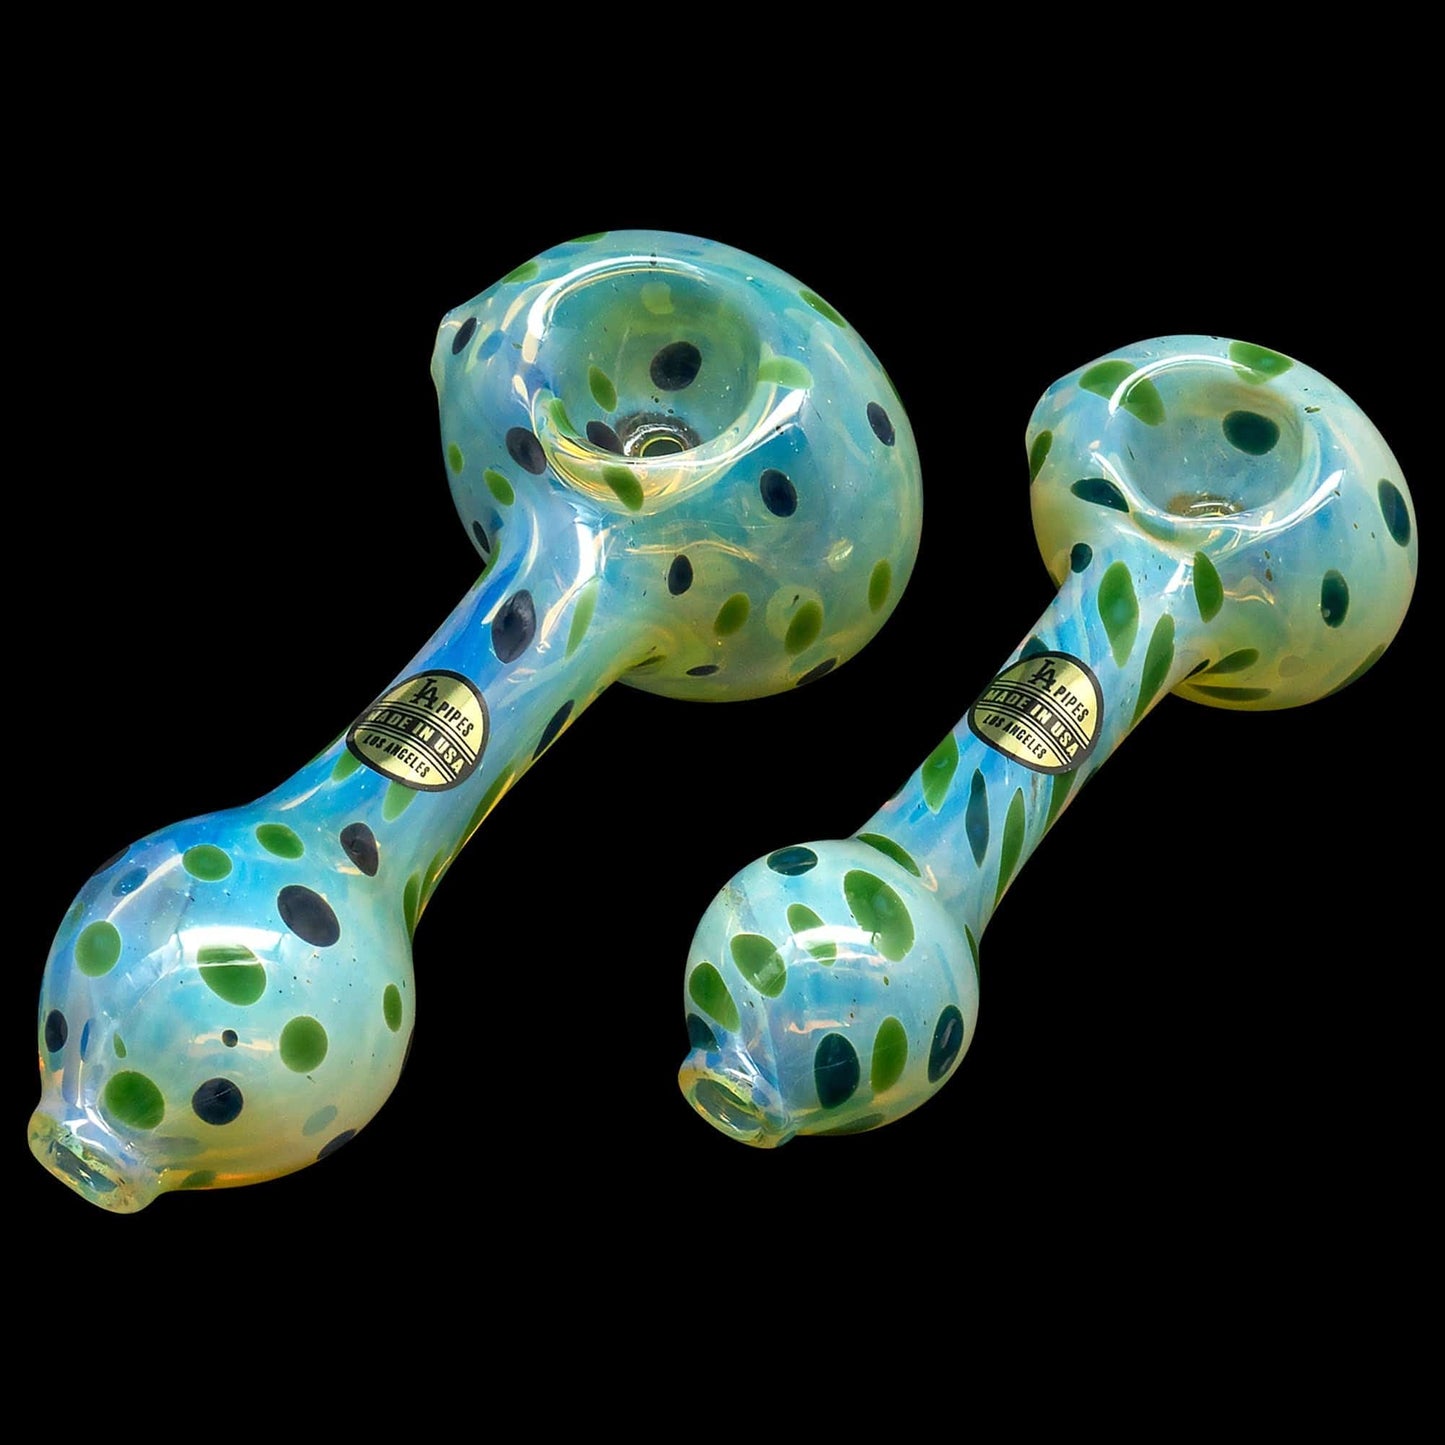 LA Pipes Hand Pipe Green Hues / 4.5 Inch "Polka Dot" Glass Spoon Pipe